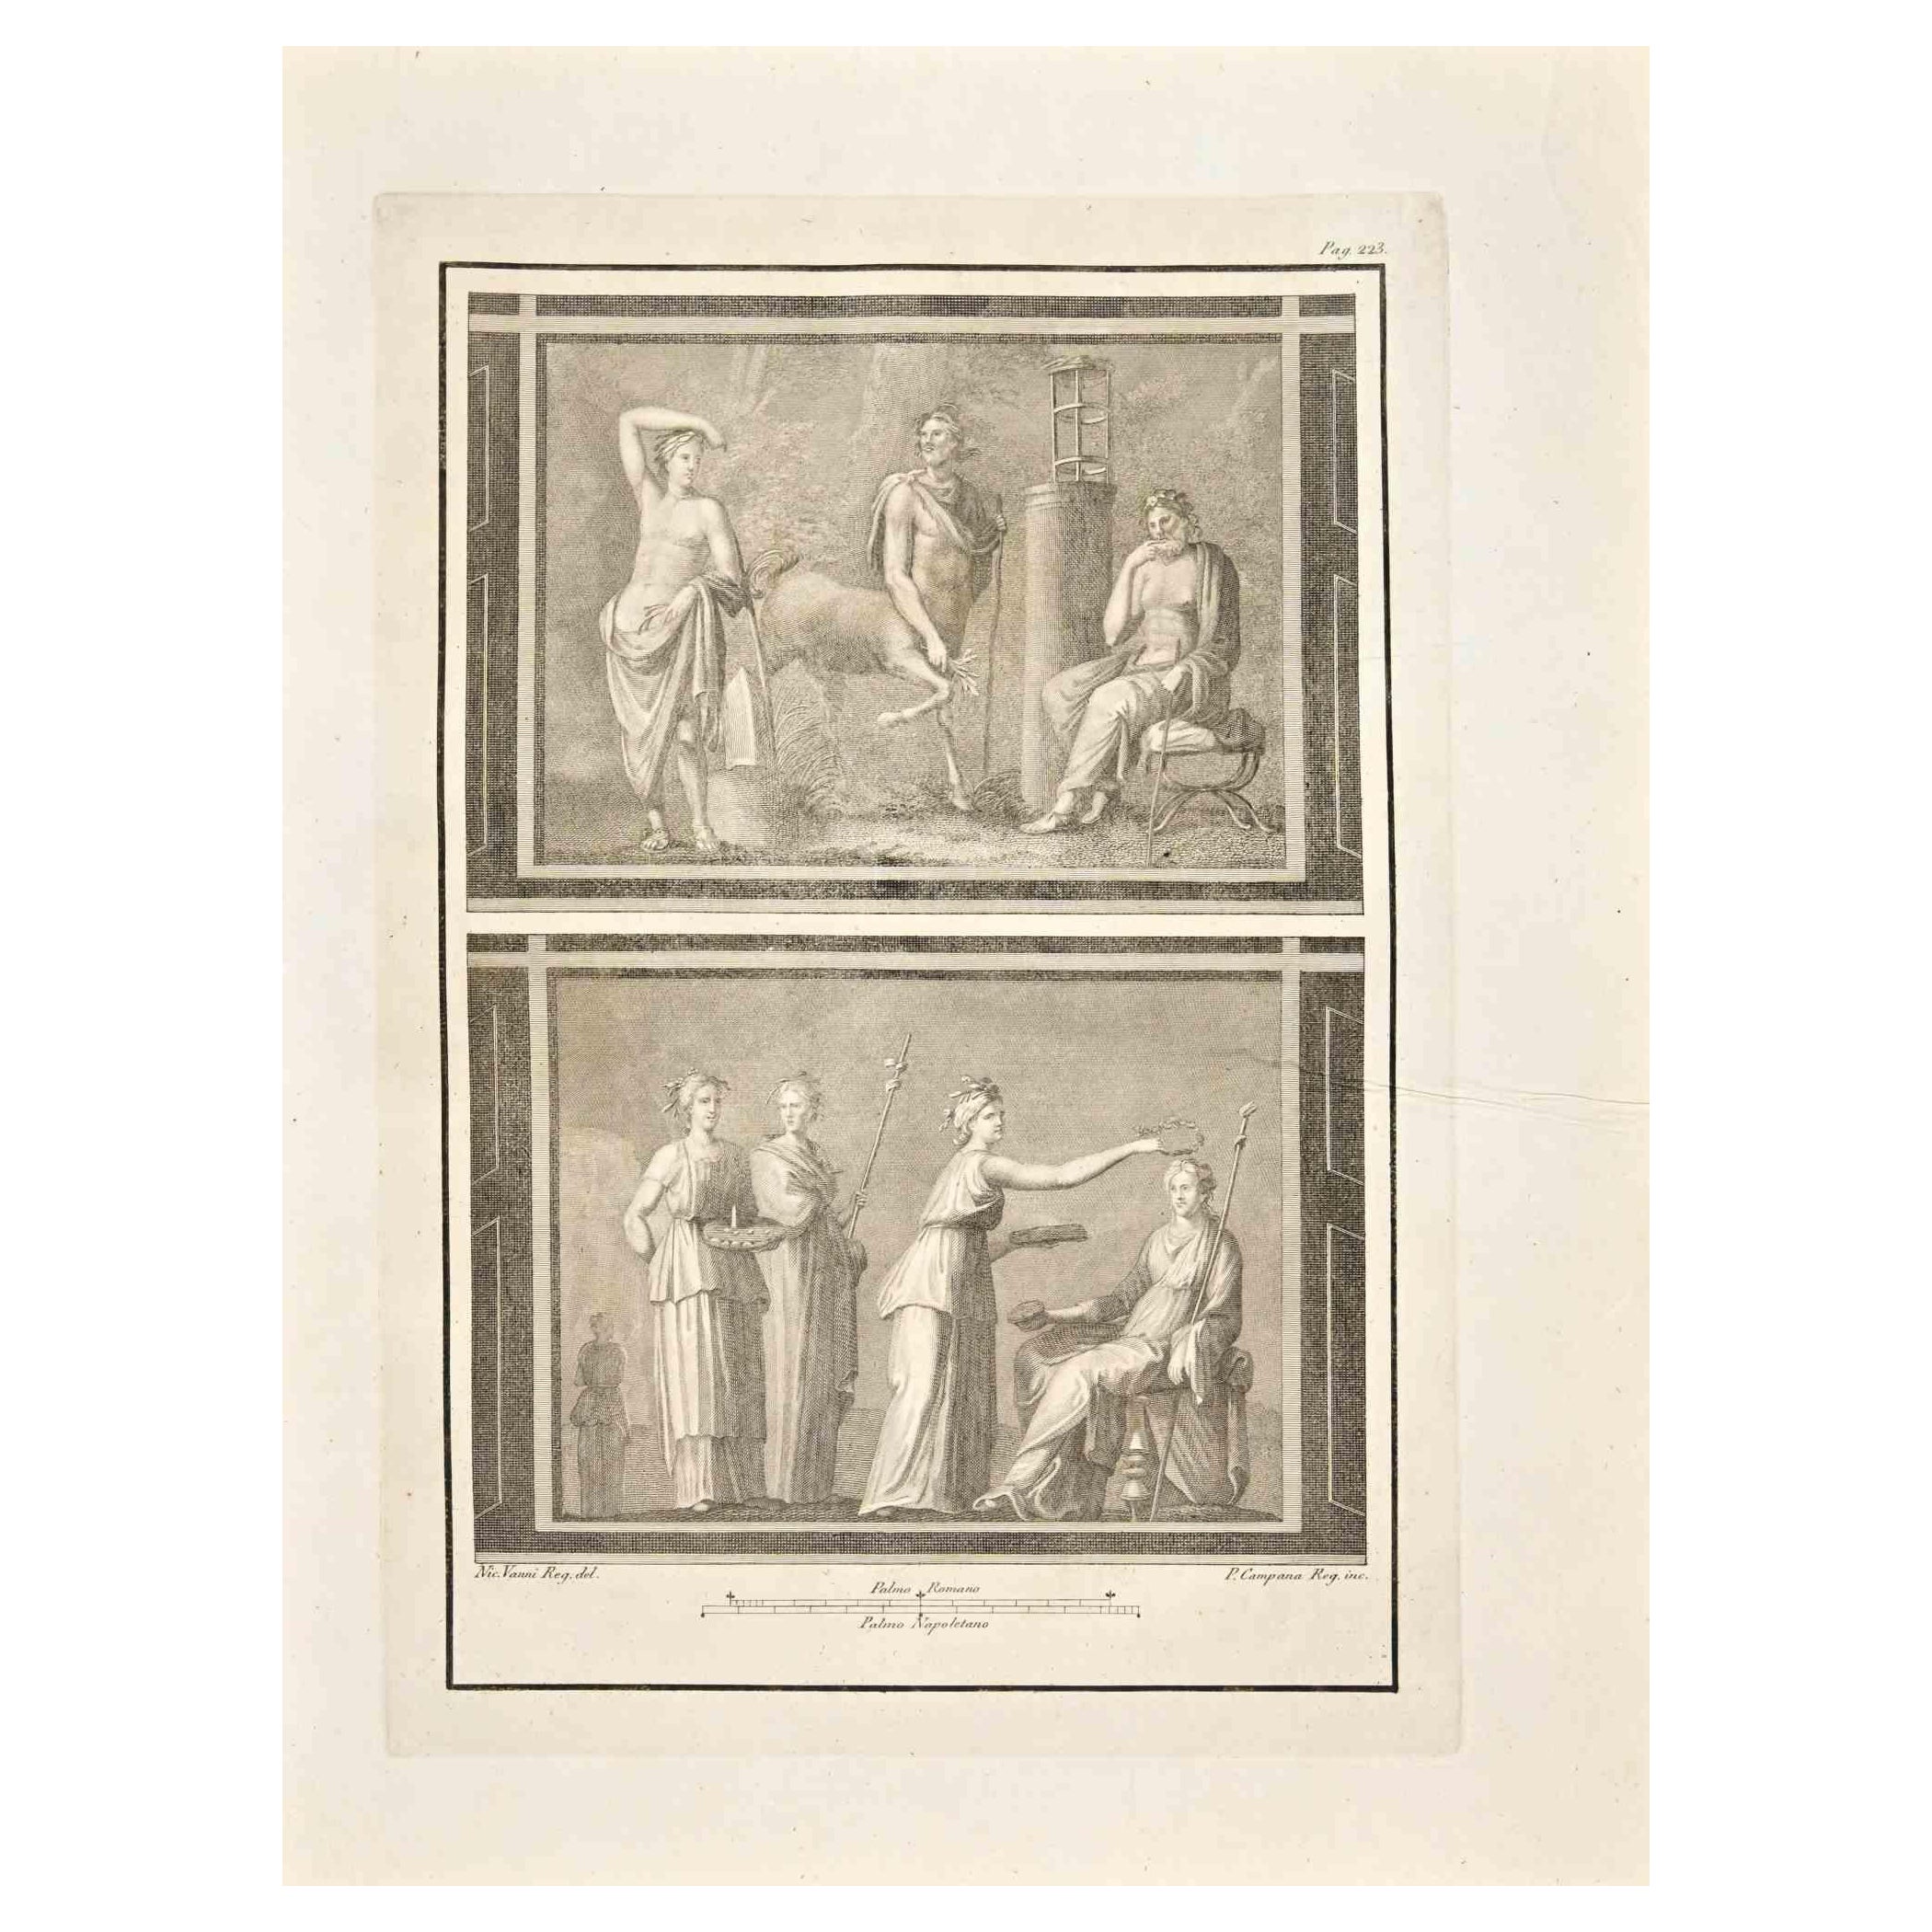 Pietro Campana Figurative Print - Ancient Roman Fresco Herculaneum - Etching P. Campana - 18th Century